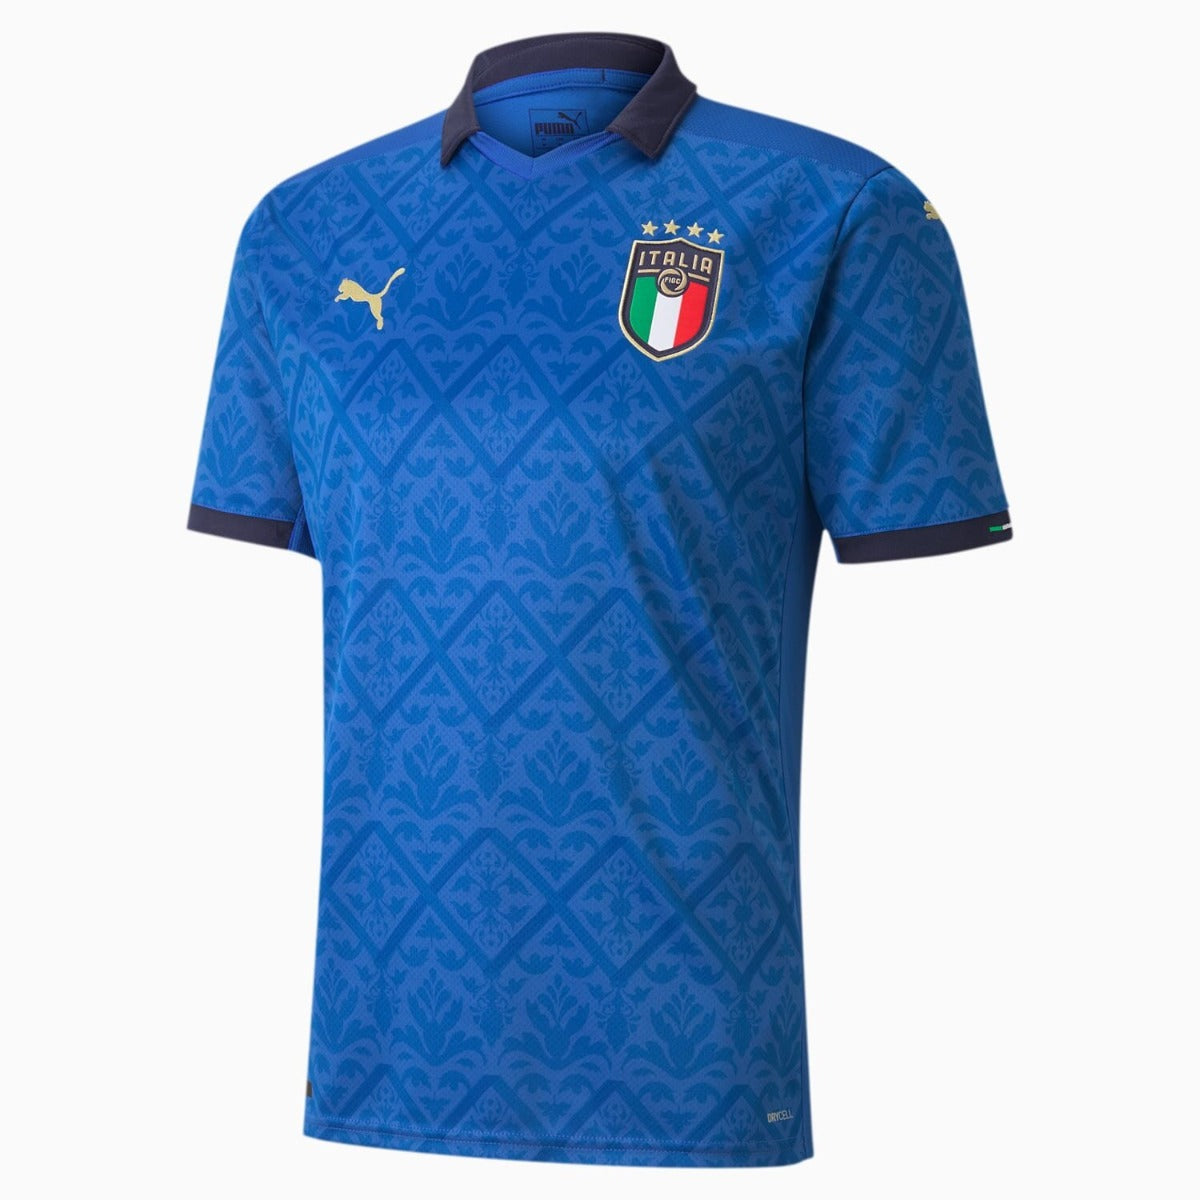 Puma 2020-21 Italy Home Jersey - Blue